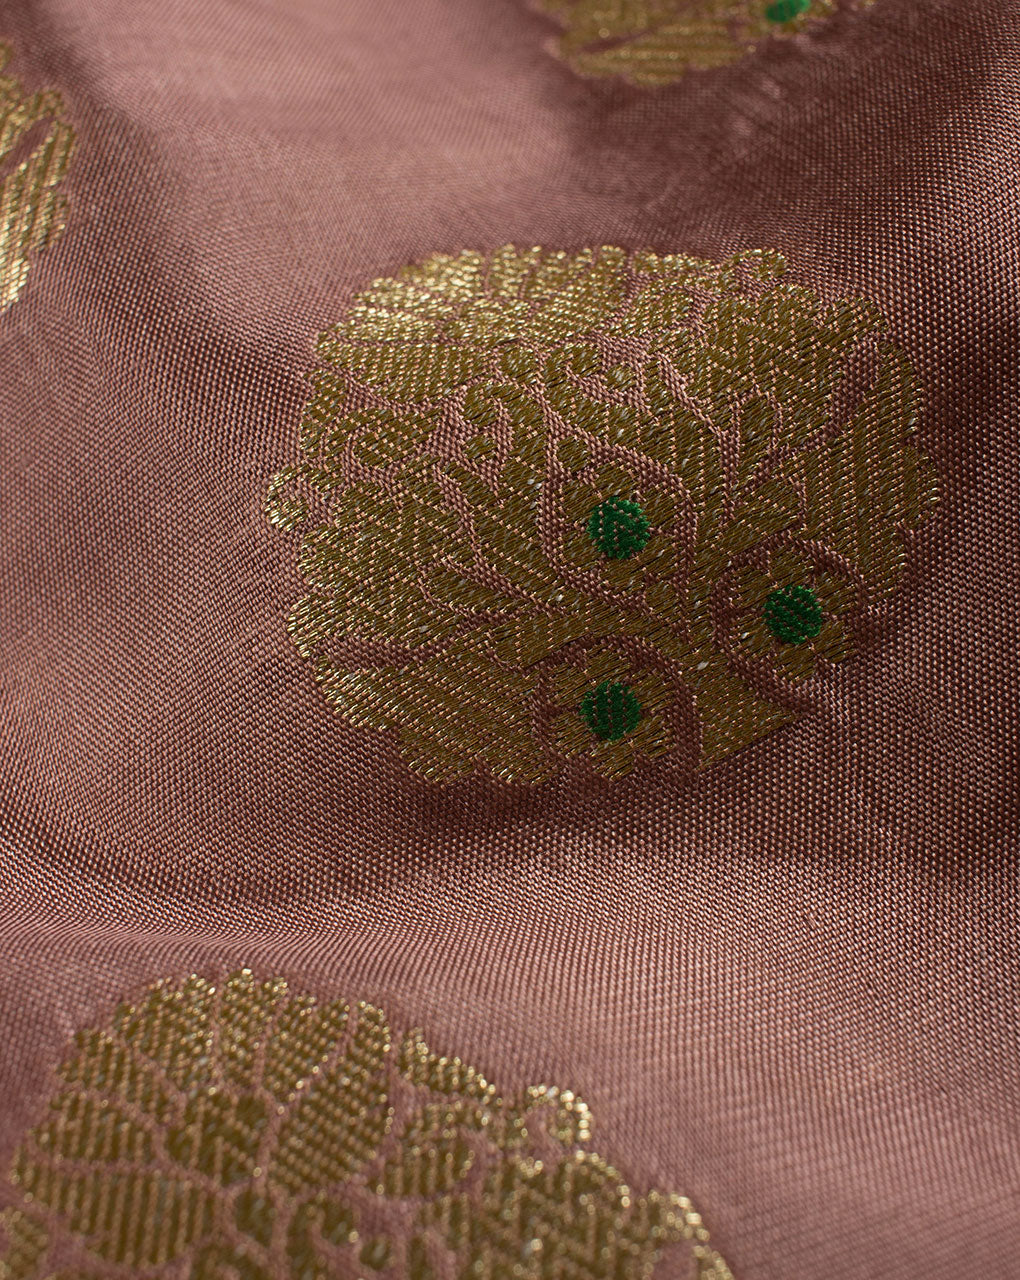 Mauve Booti Zari Jacquard Banarasi Taffeta Silk Fabric - Fabriclore.com